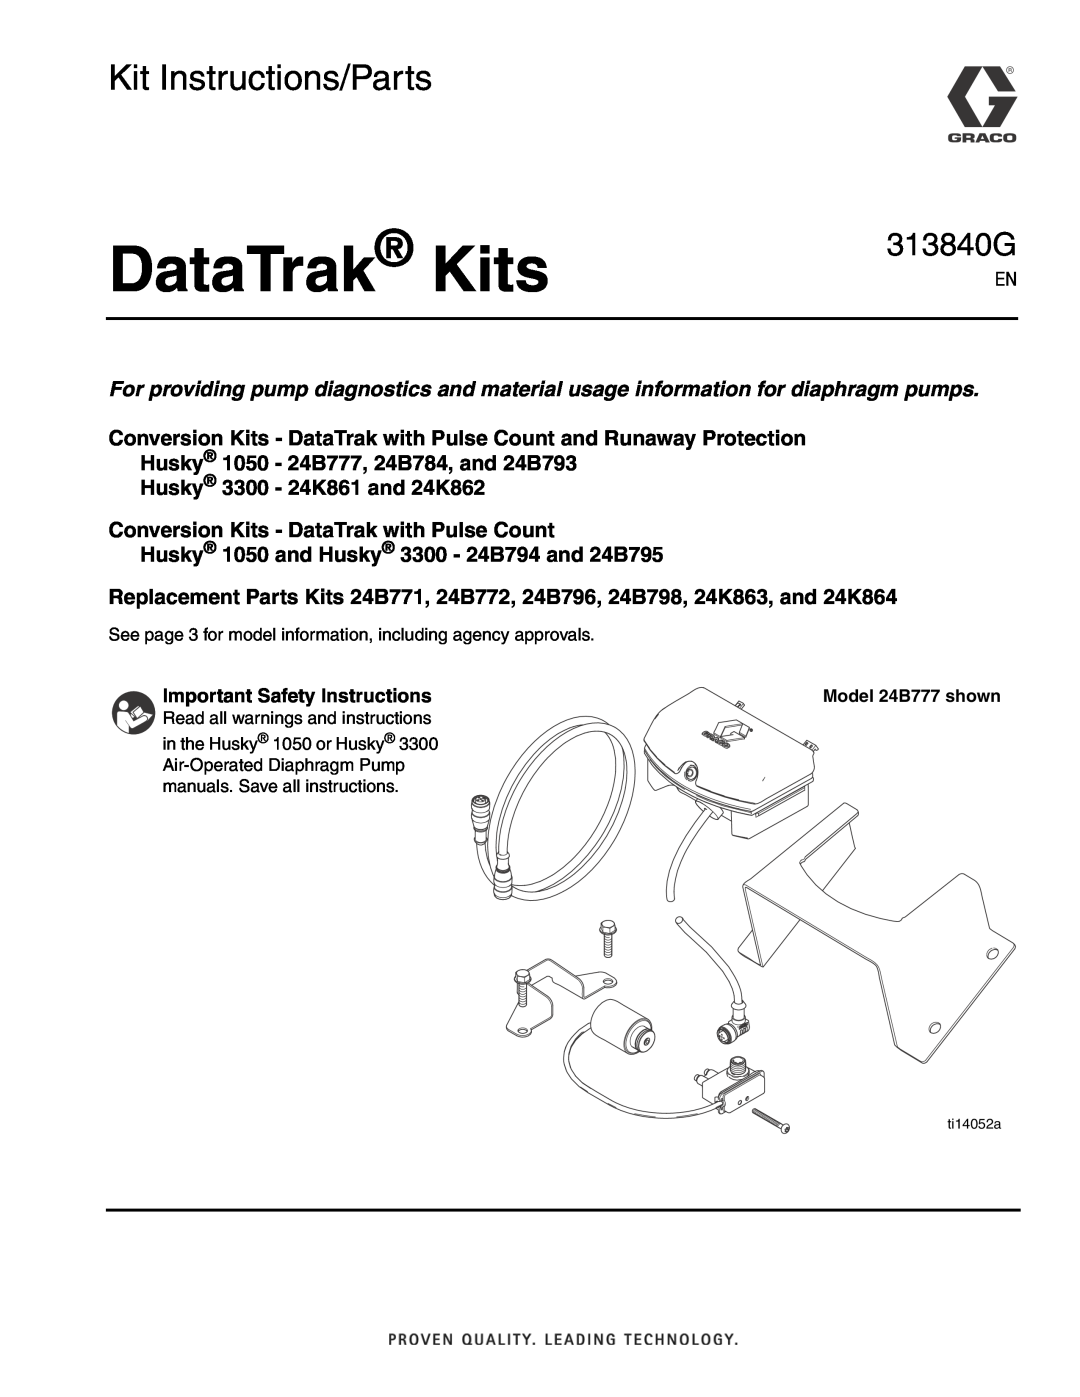 Graco 24B796, 24K861, 24B795, 24K864, 24B793 important safety instructions DataTrak Kits, Kit Instructions/Parts, 313840G 